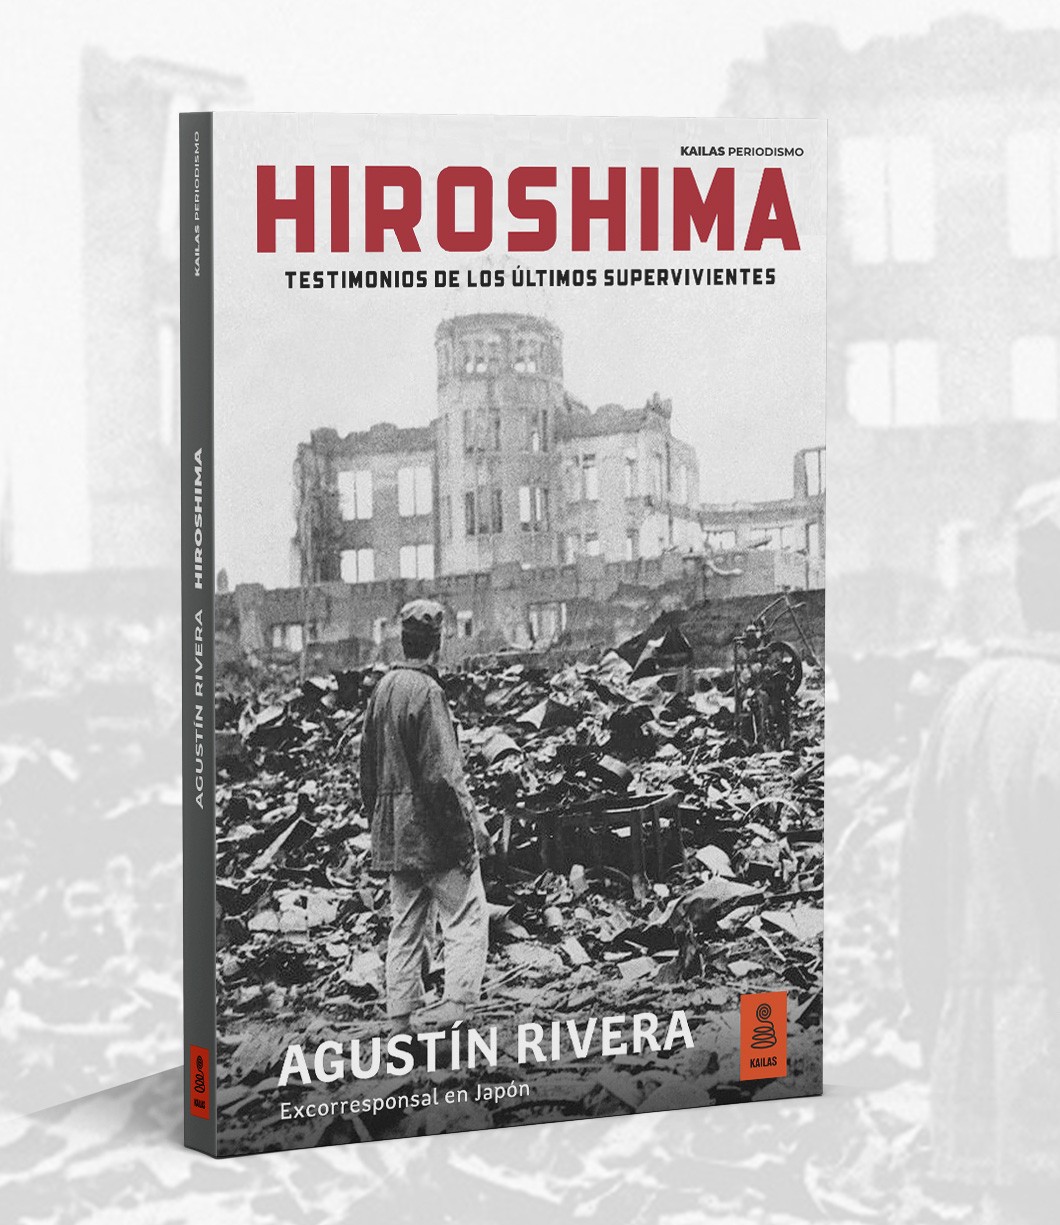 AGUSTÍN RIVERA, Hiroshima. Testimonios de los últimos supervivientes (Kailas)